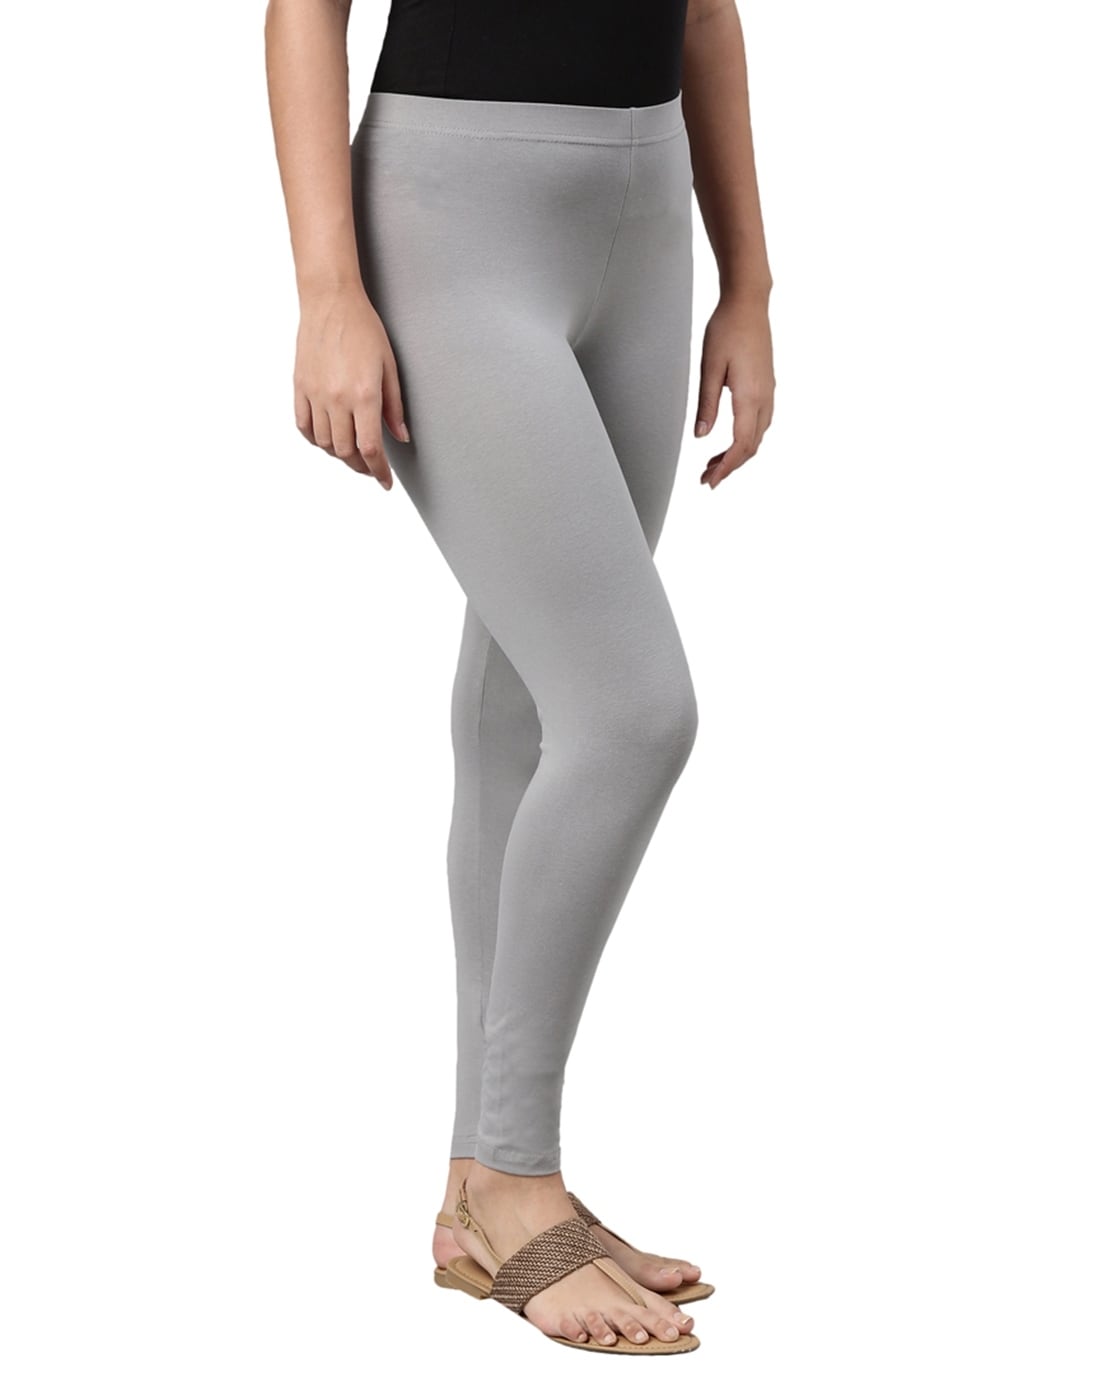 30 Colors Leggings Women Cotton Churidar Solid Regular and Plus Size Yoga  Pants | eBay